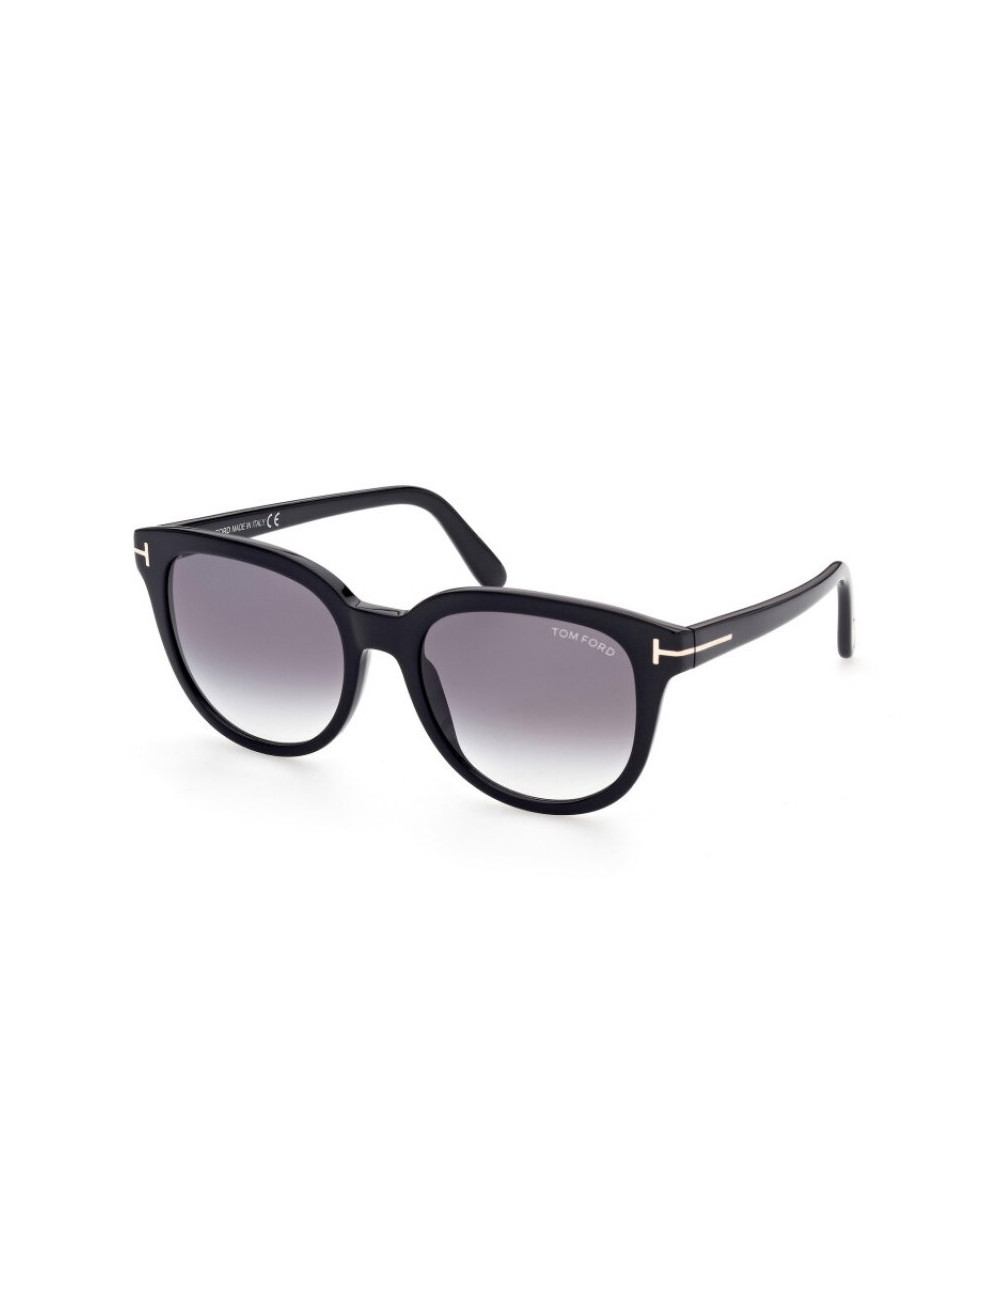 Tom Ford Grey Square Men's Sunglasses FT0890-K 20A 55 889214289490 -  Sunglasses - Jomashop